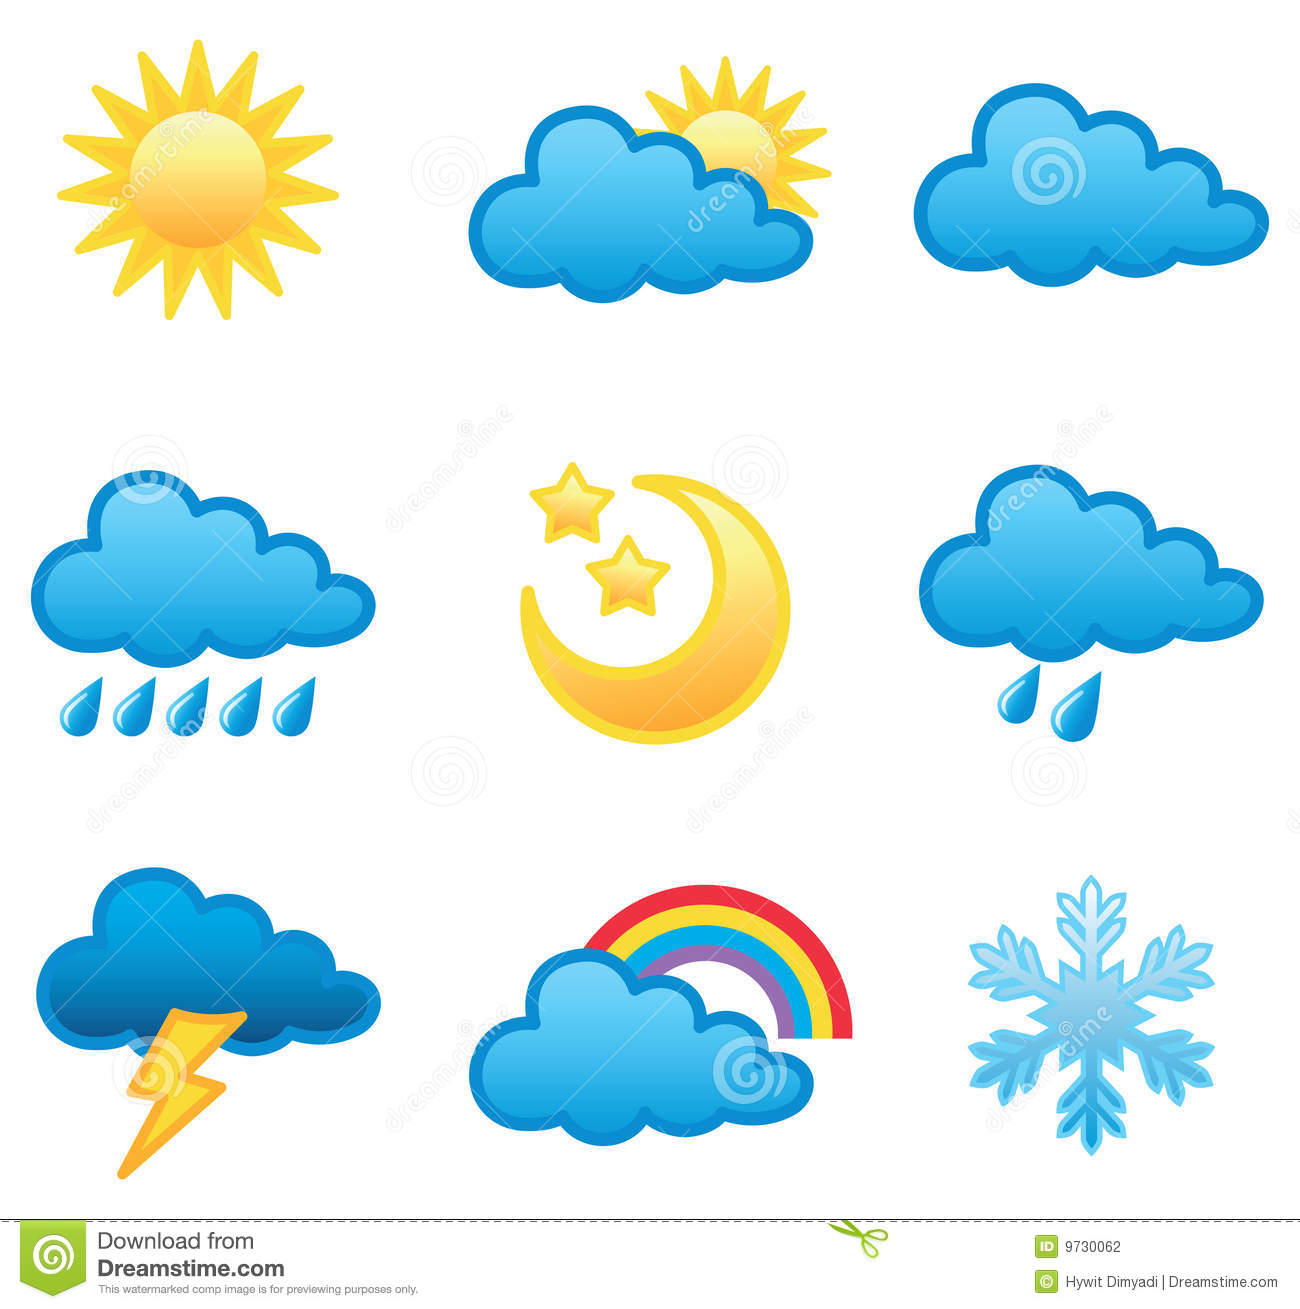 Weather Forecast Icons